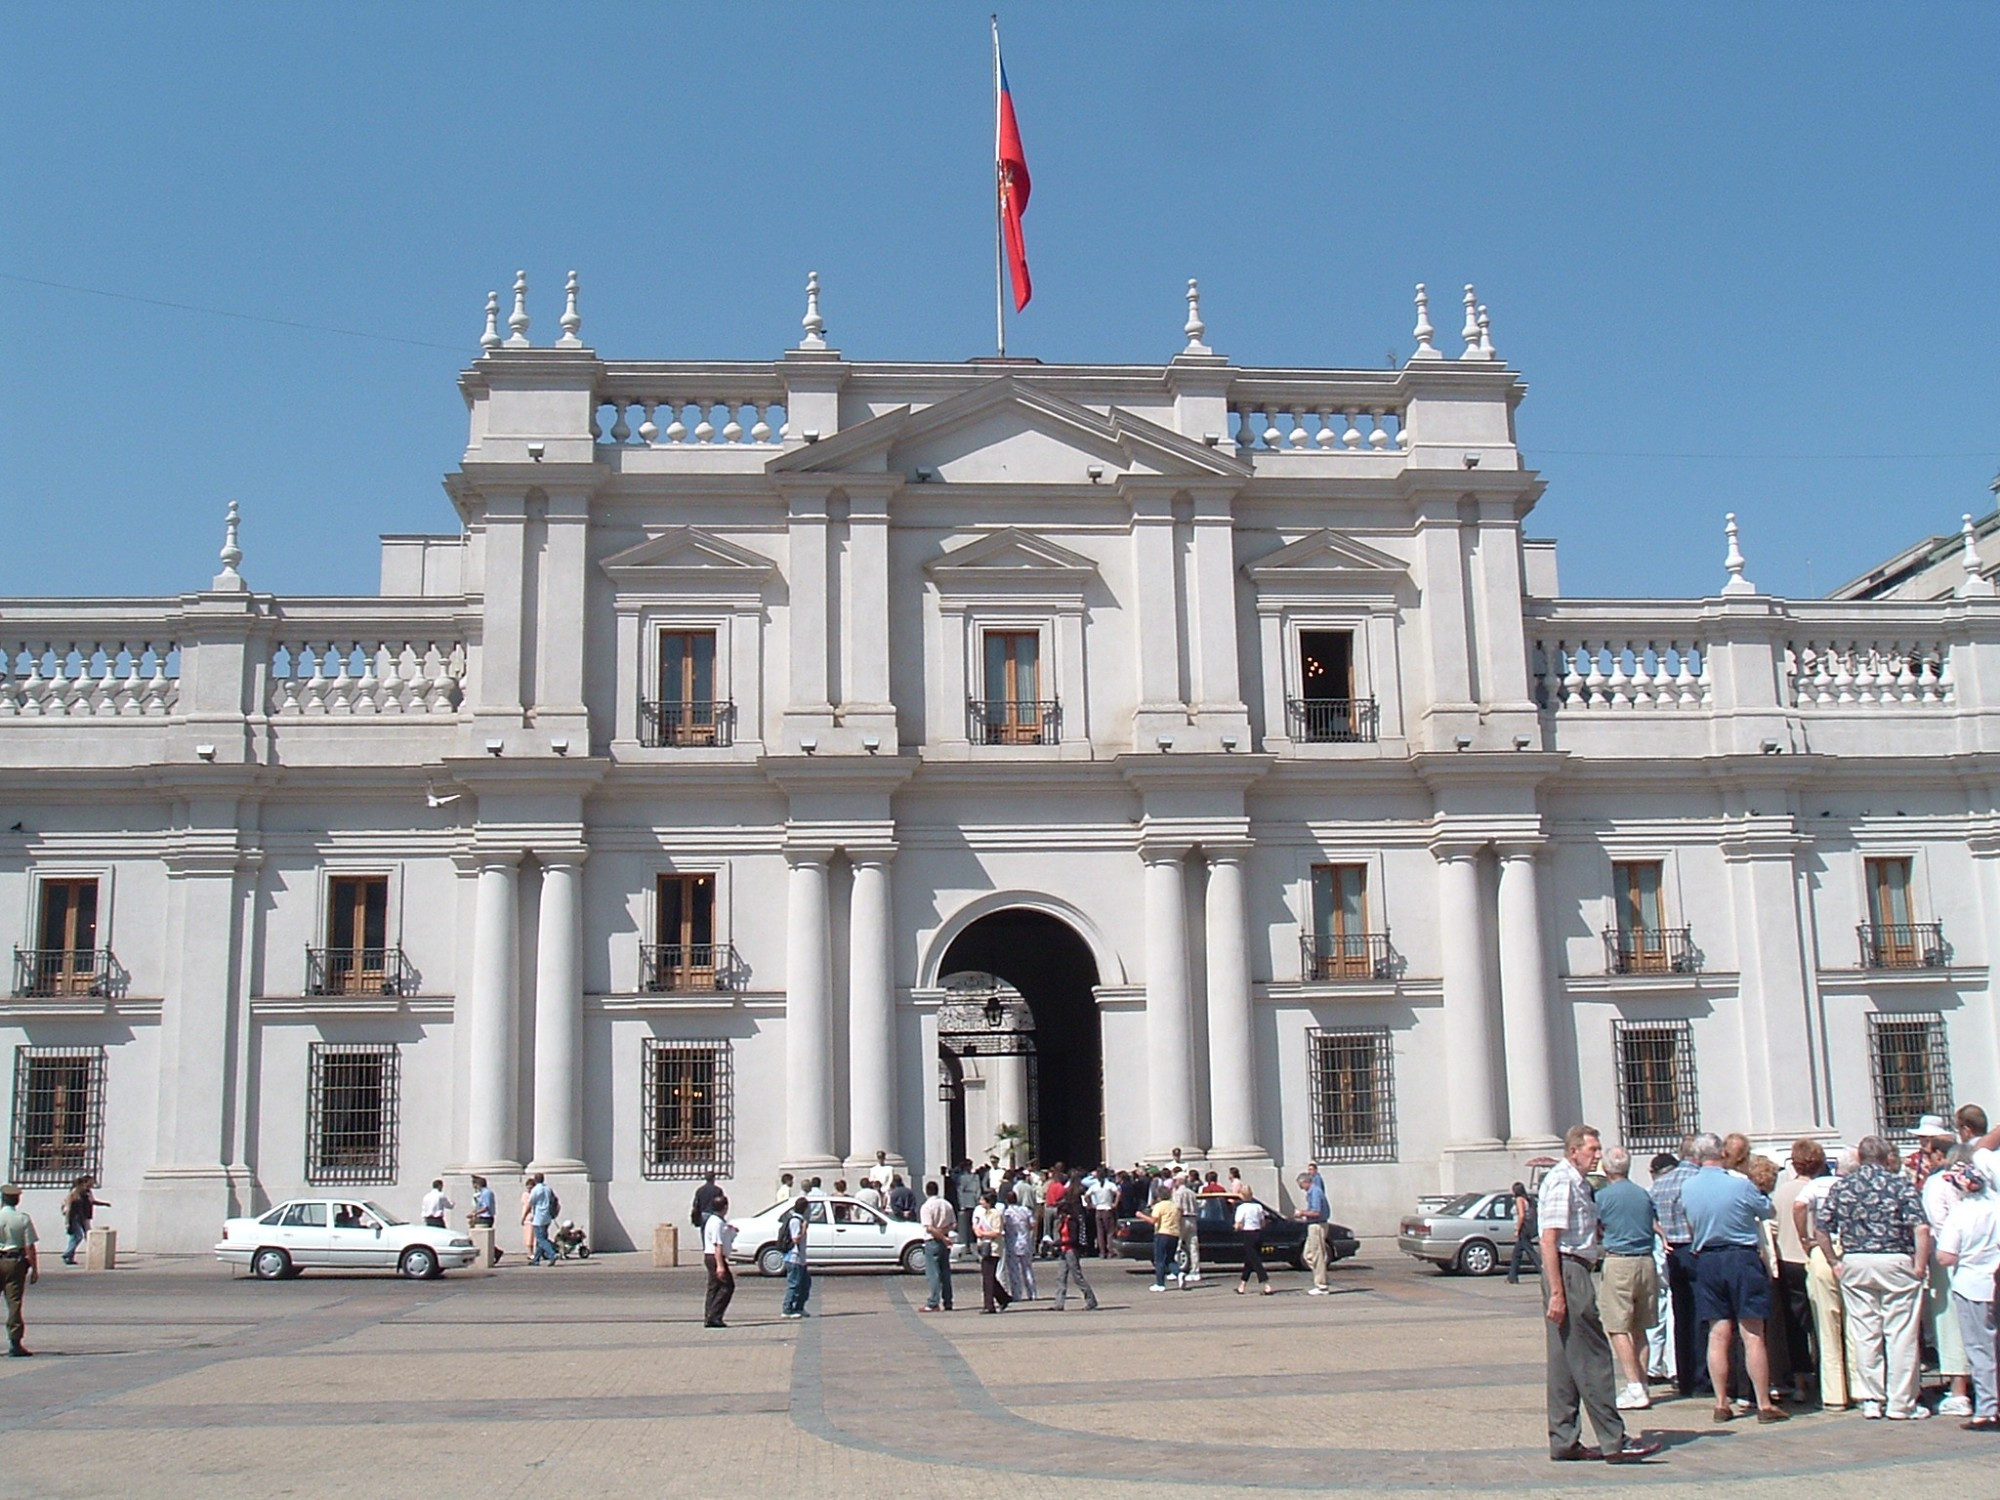 Casa de La Moneda